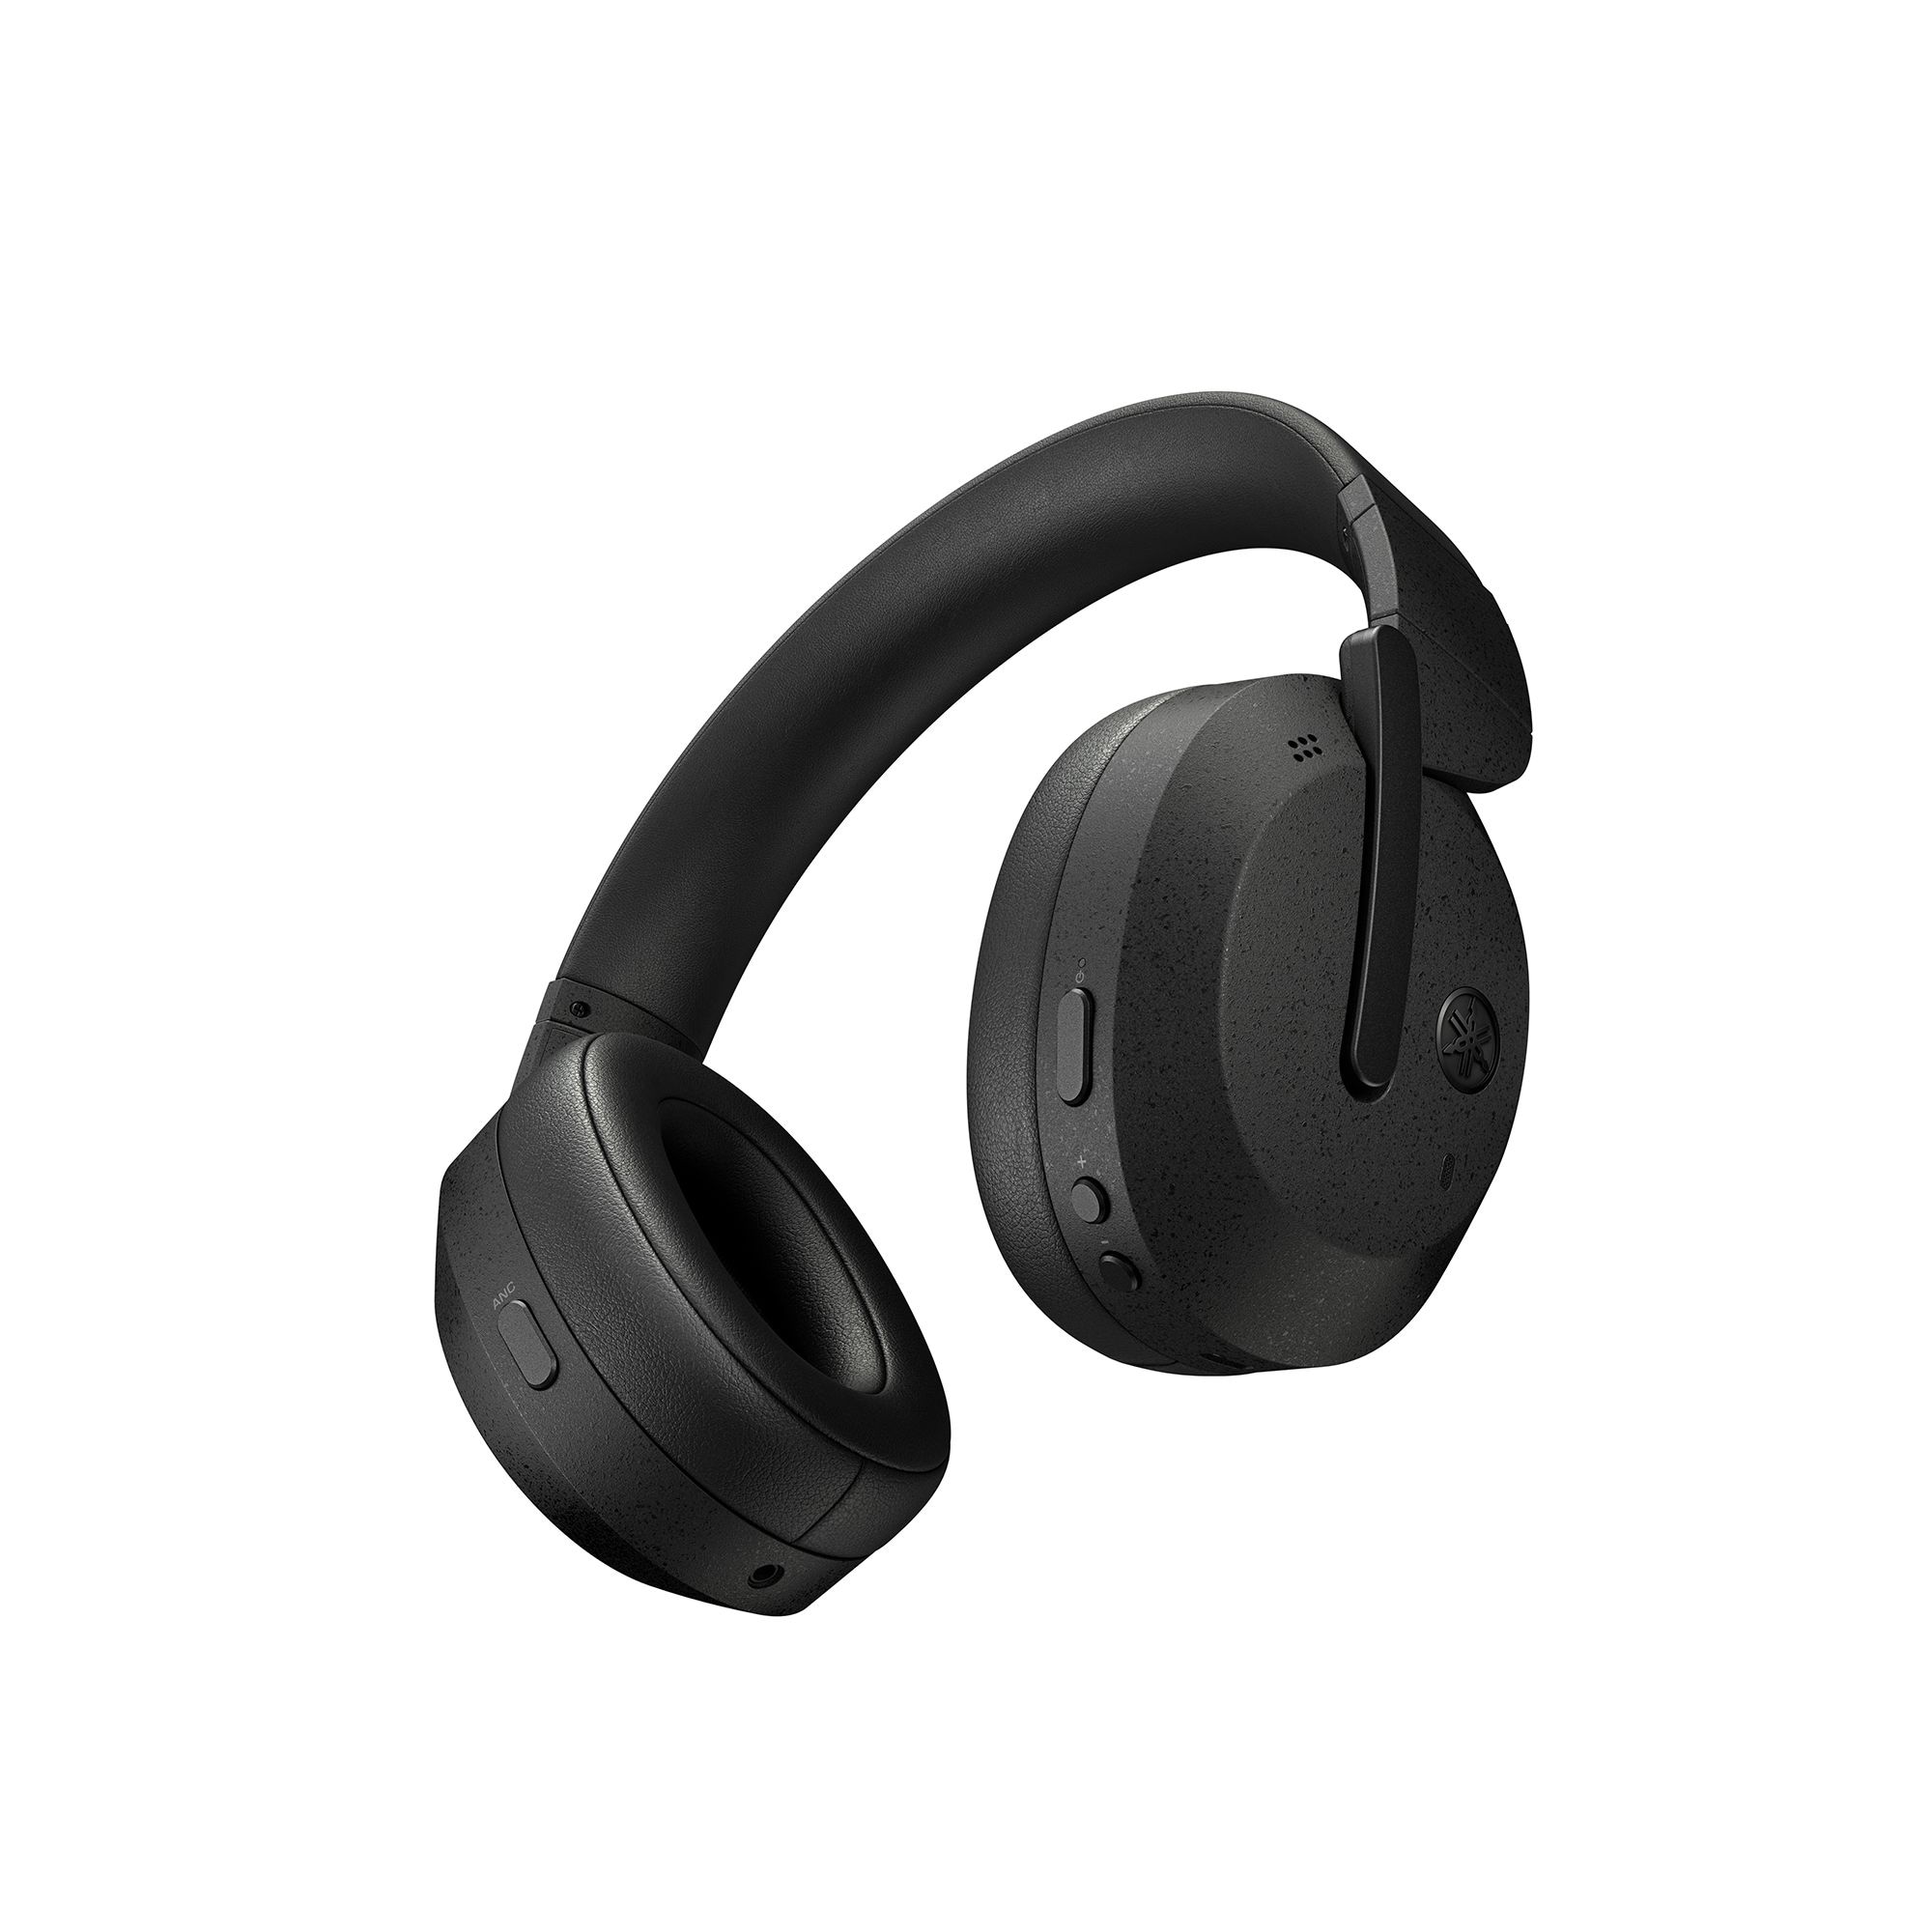 YH-E700B - Specs - Products - Audio & - USA Yamaha Visual - Headphones